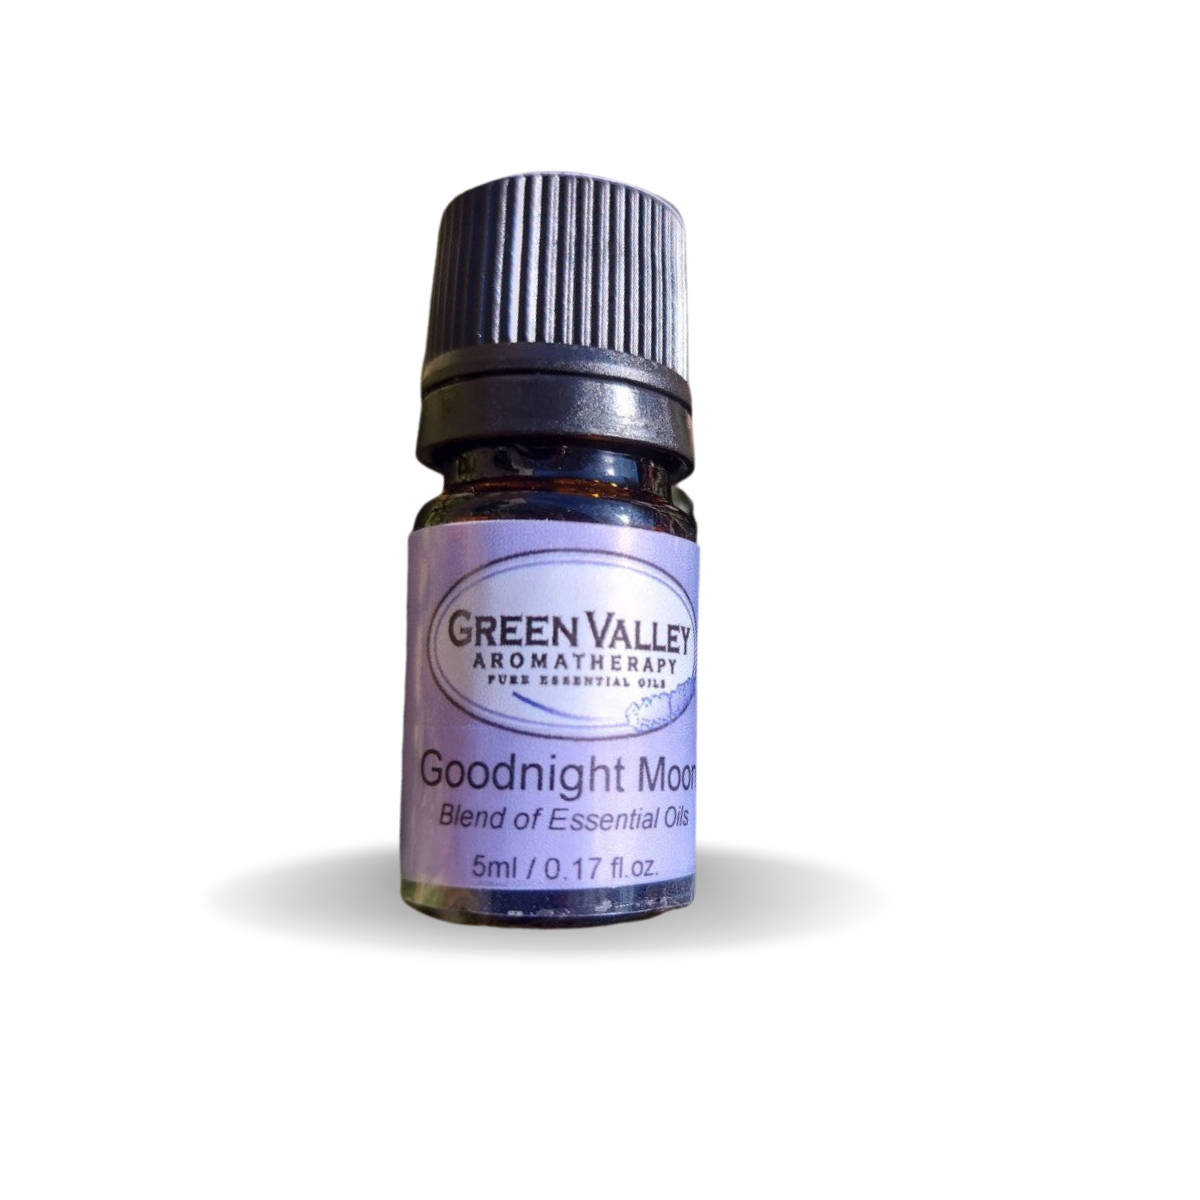 Goodnight Moon Oil Blend + Aromatherapy + Olfactory Sensory Wellness 01